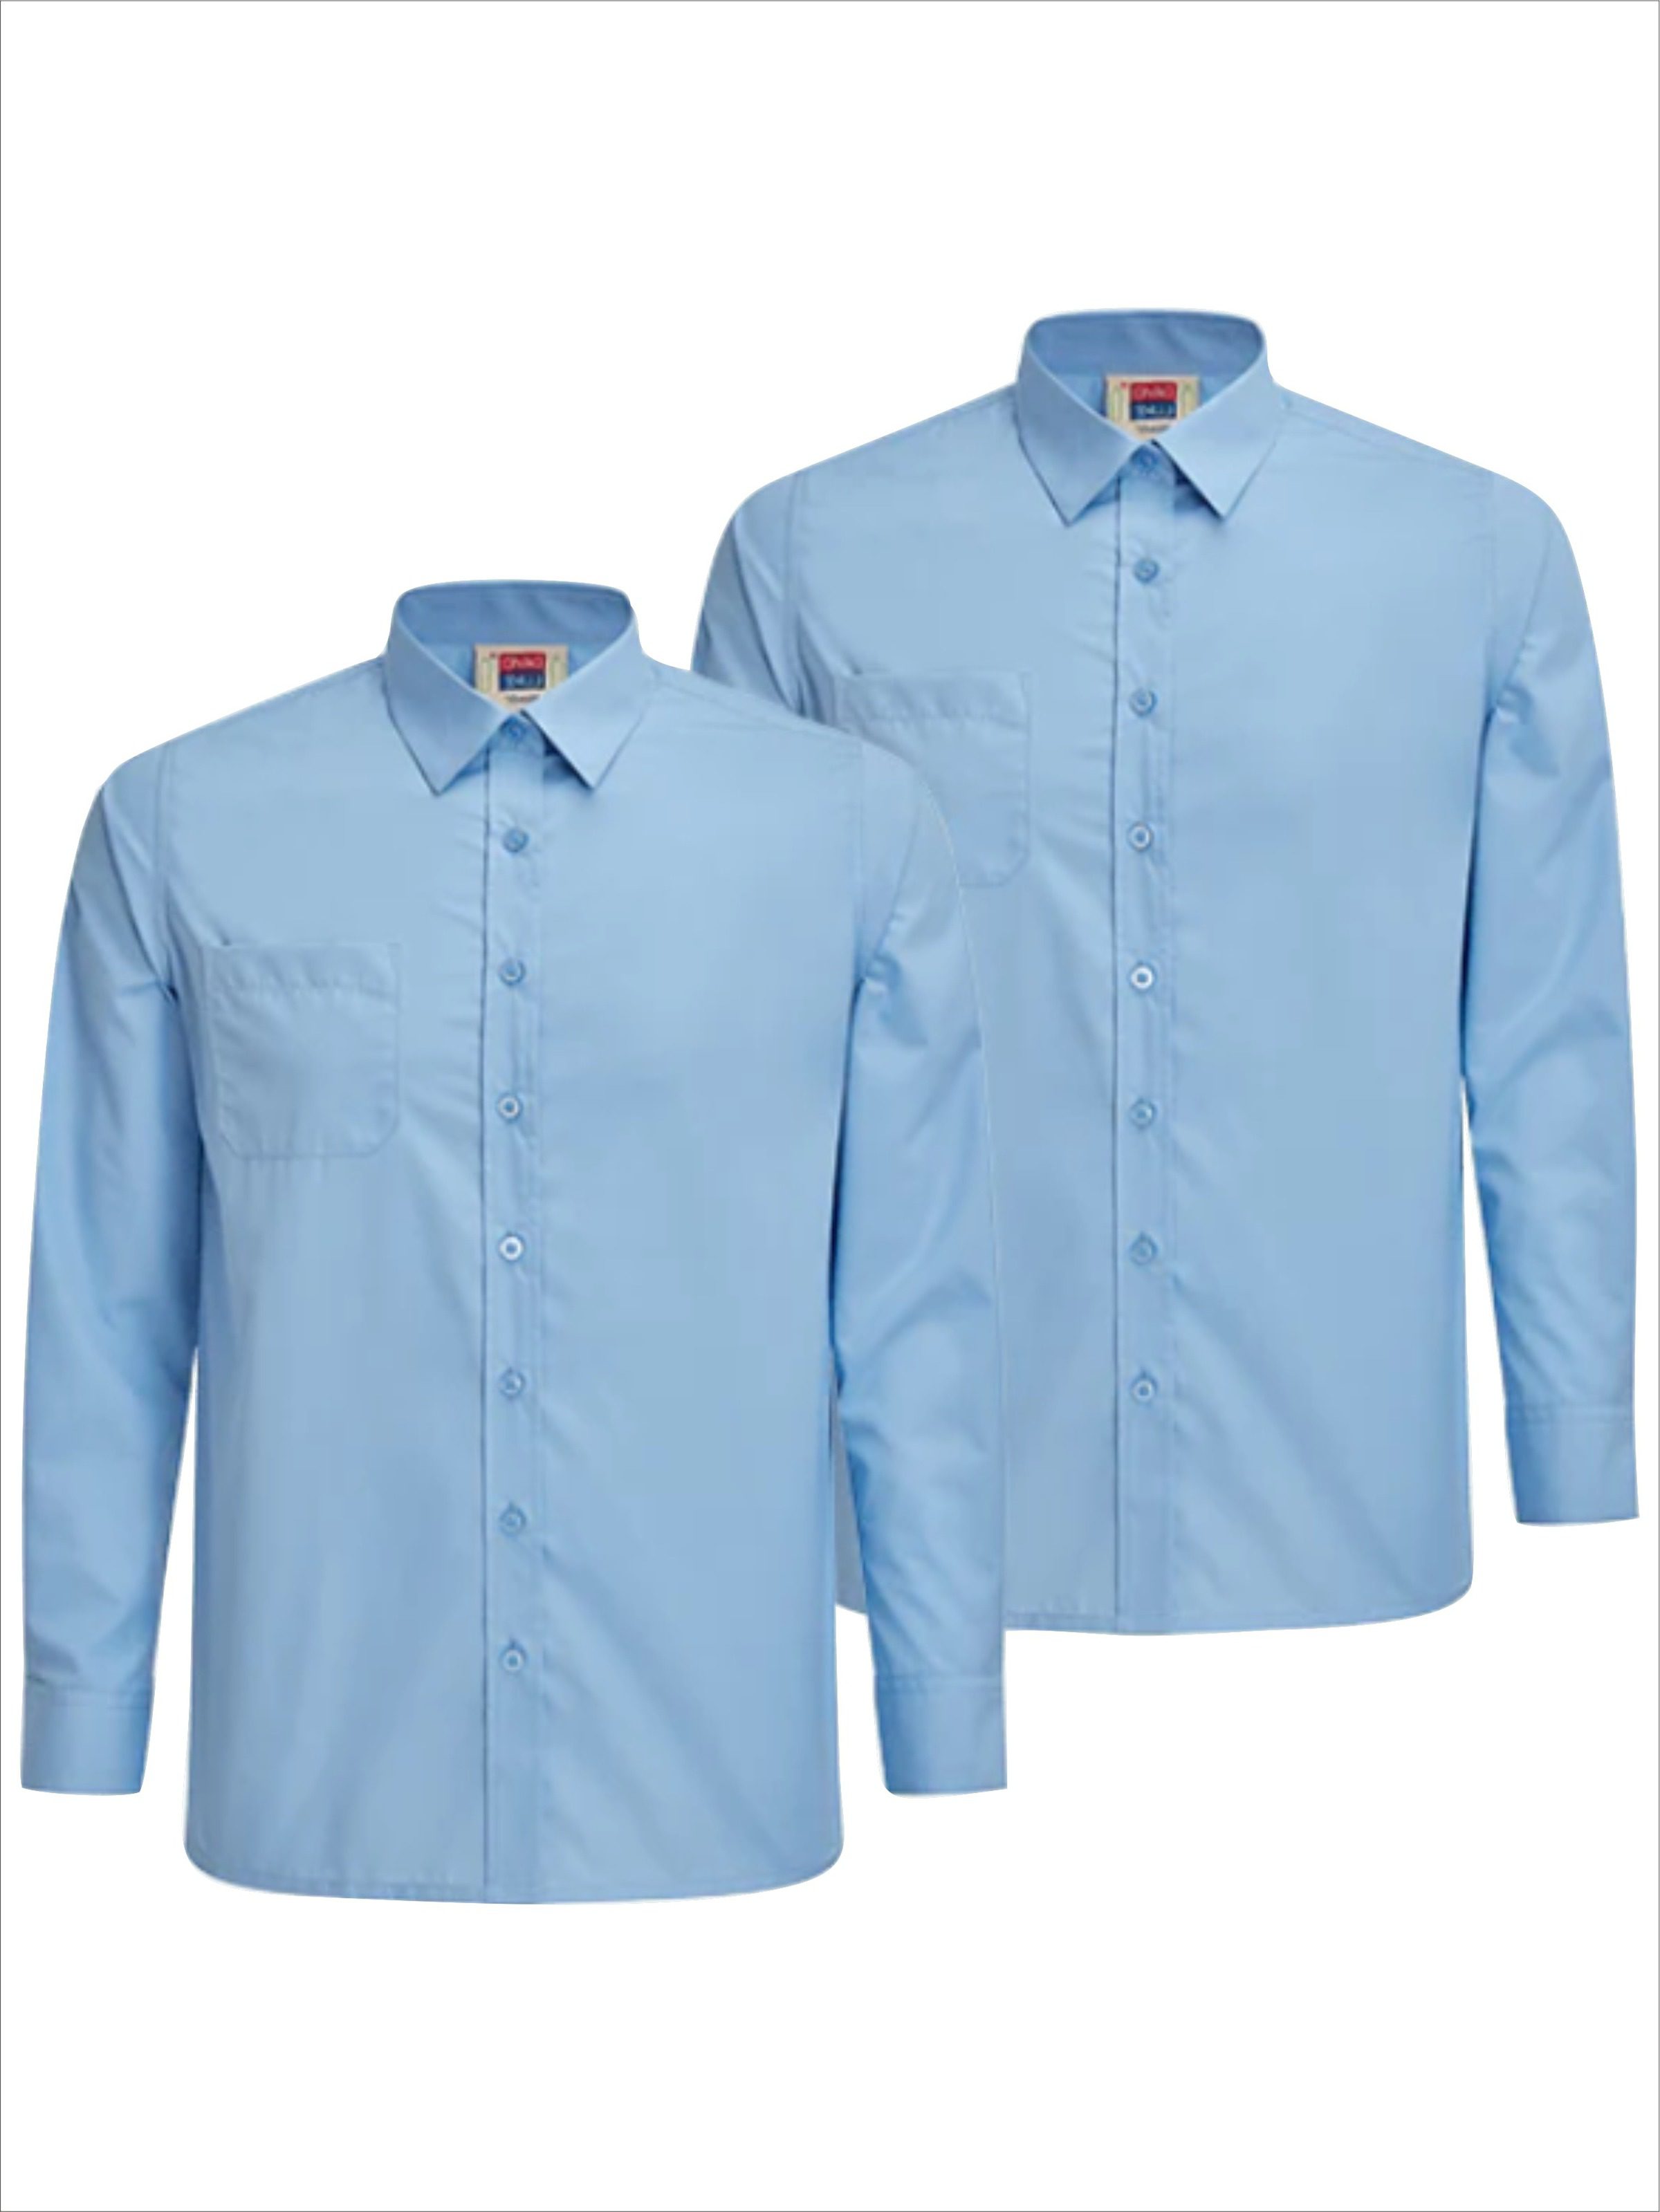 Blue Long Sleeve Shirts